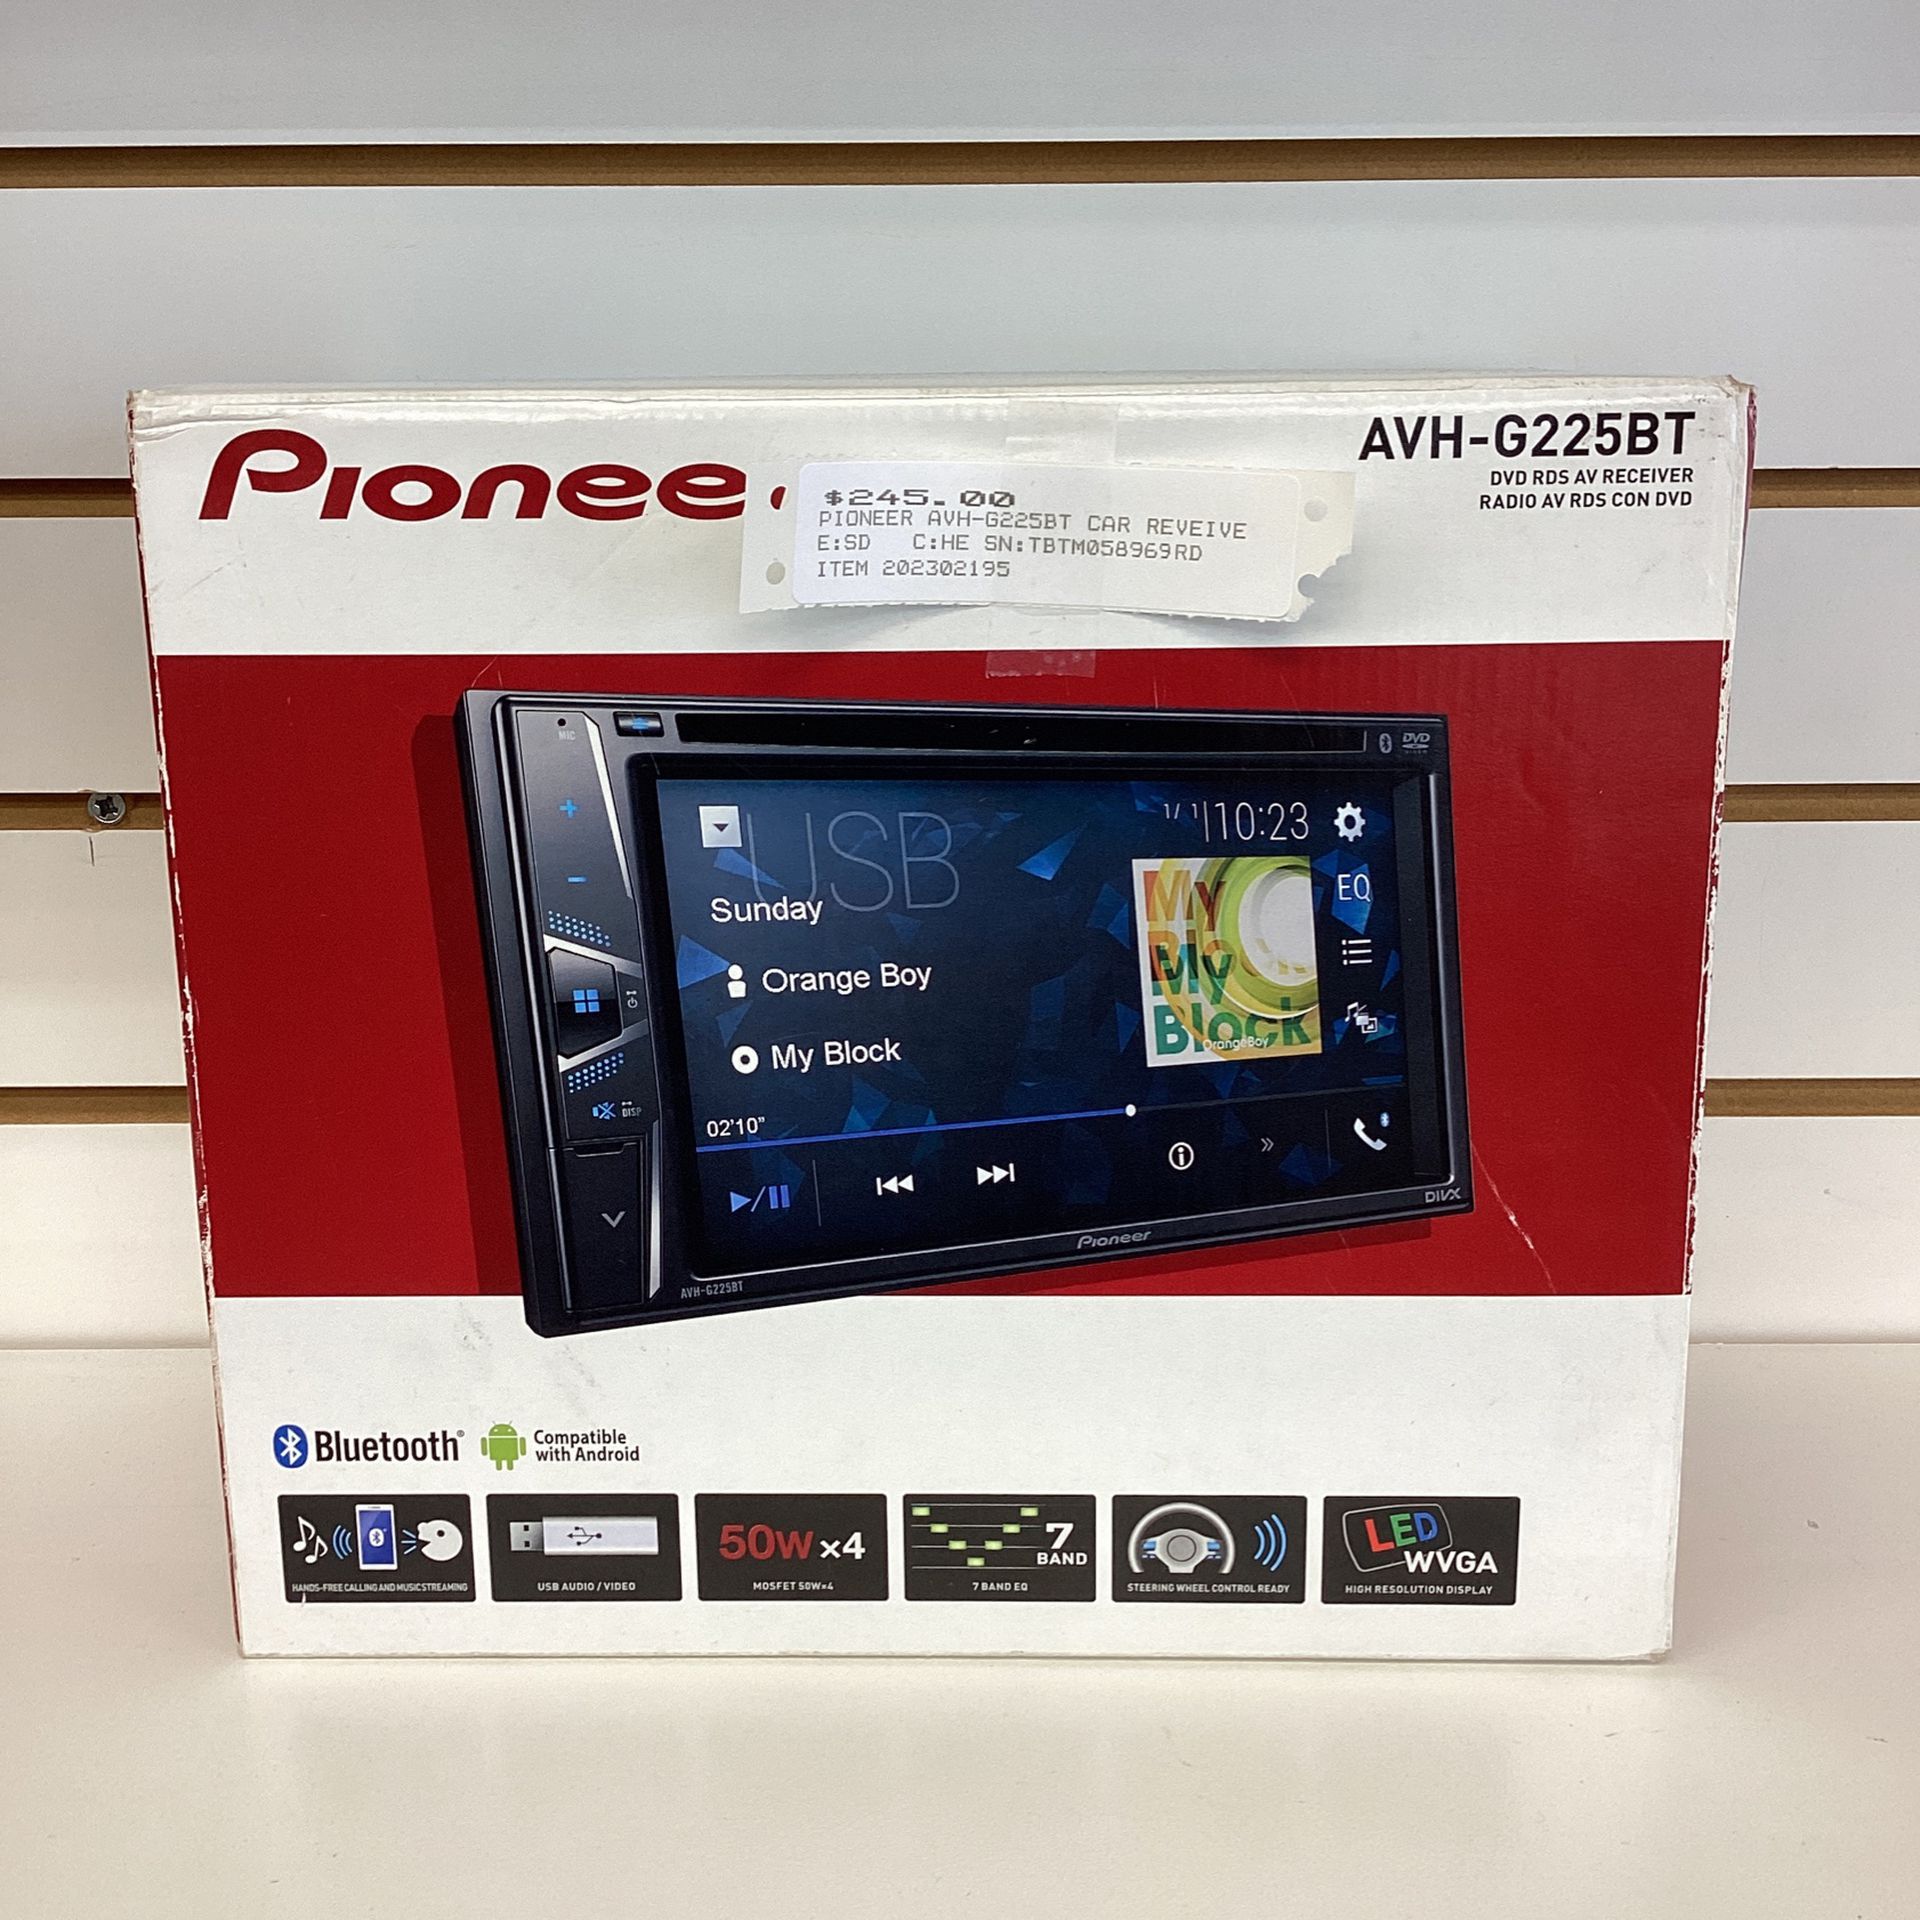 PIONEER AVH-G225BT DVD RDS AV Receiver / MP3, WMA, AAC / NEW in BOX